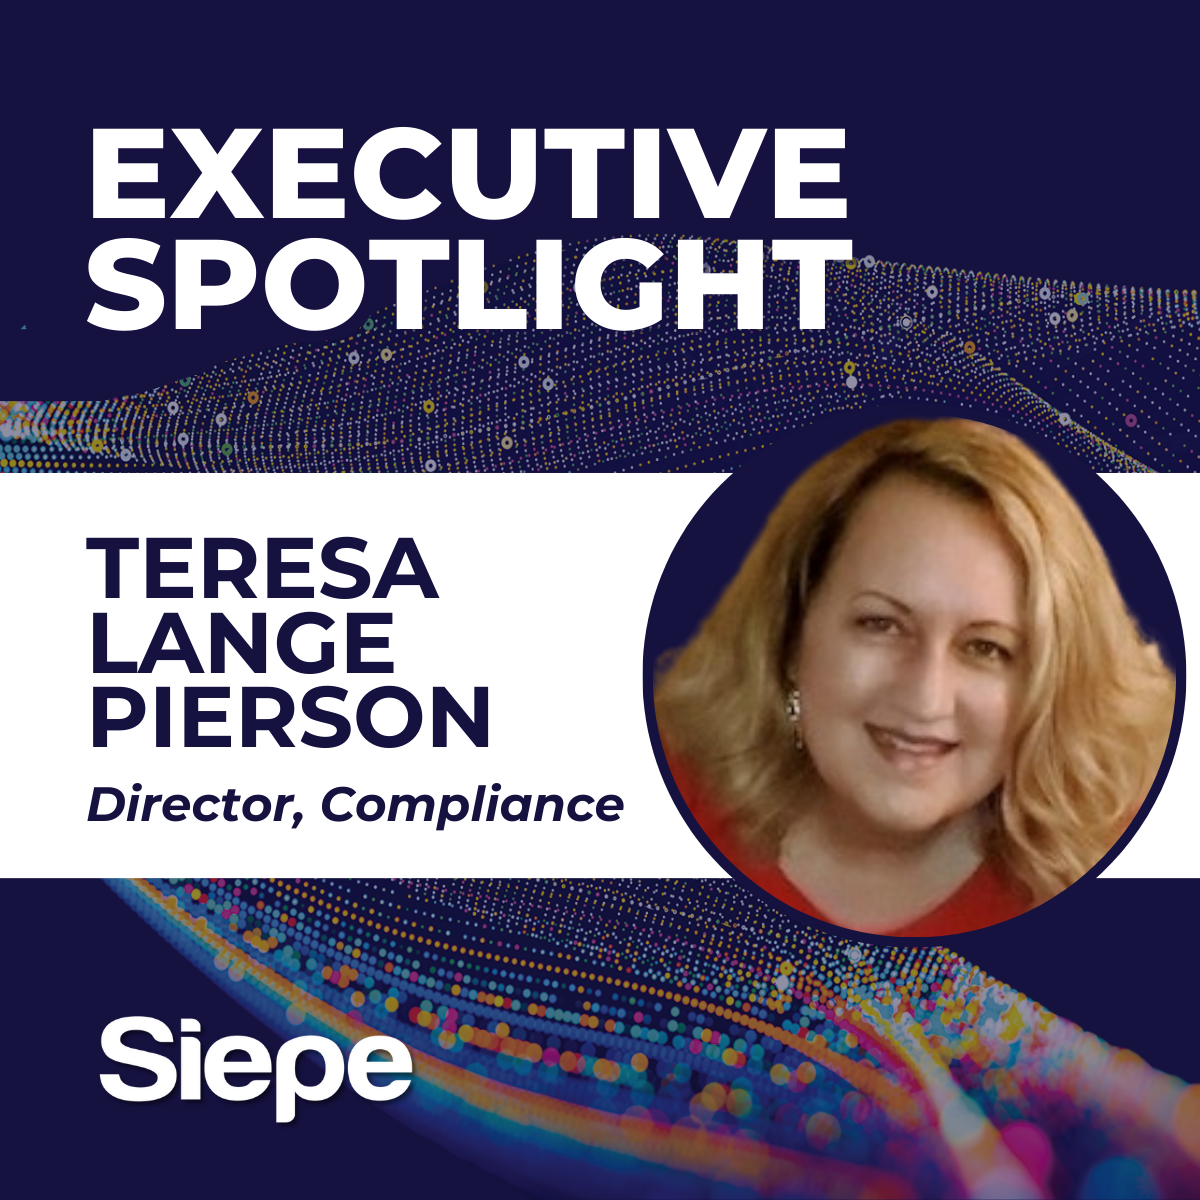 Executive Spotlight - Teresa Lange Pierson